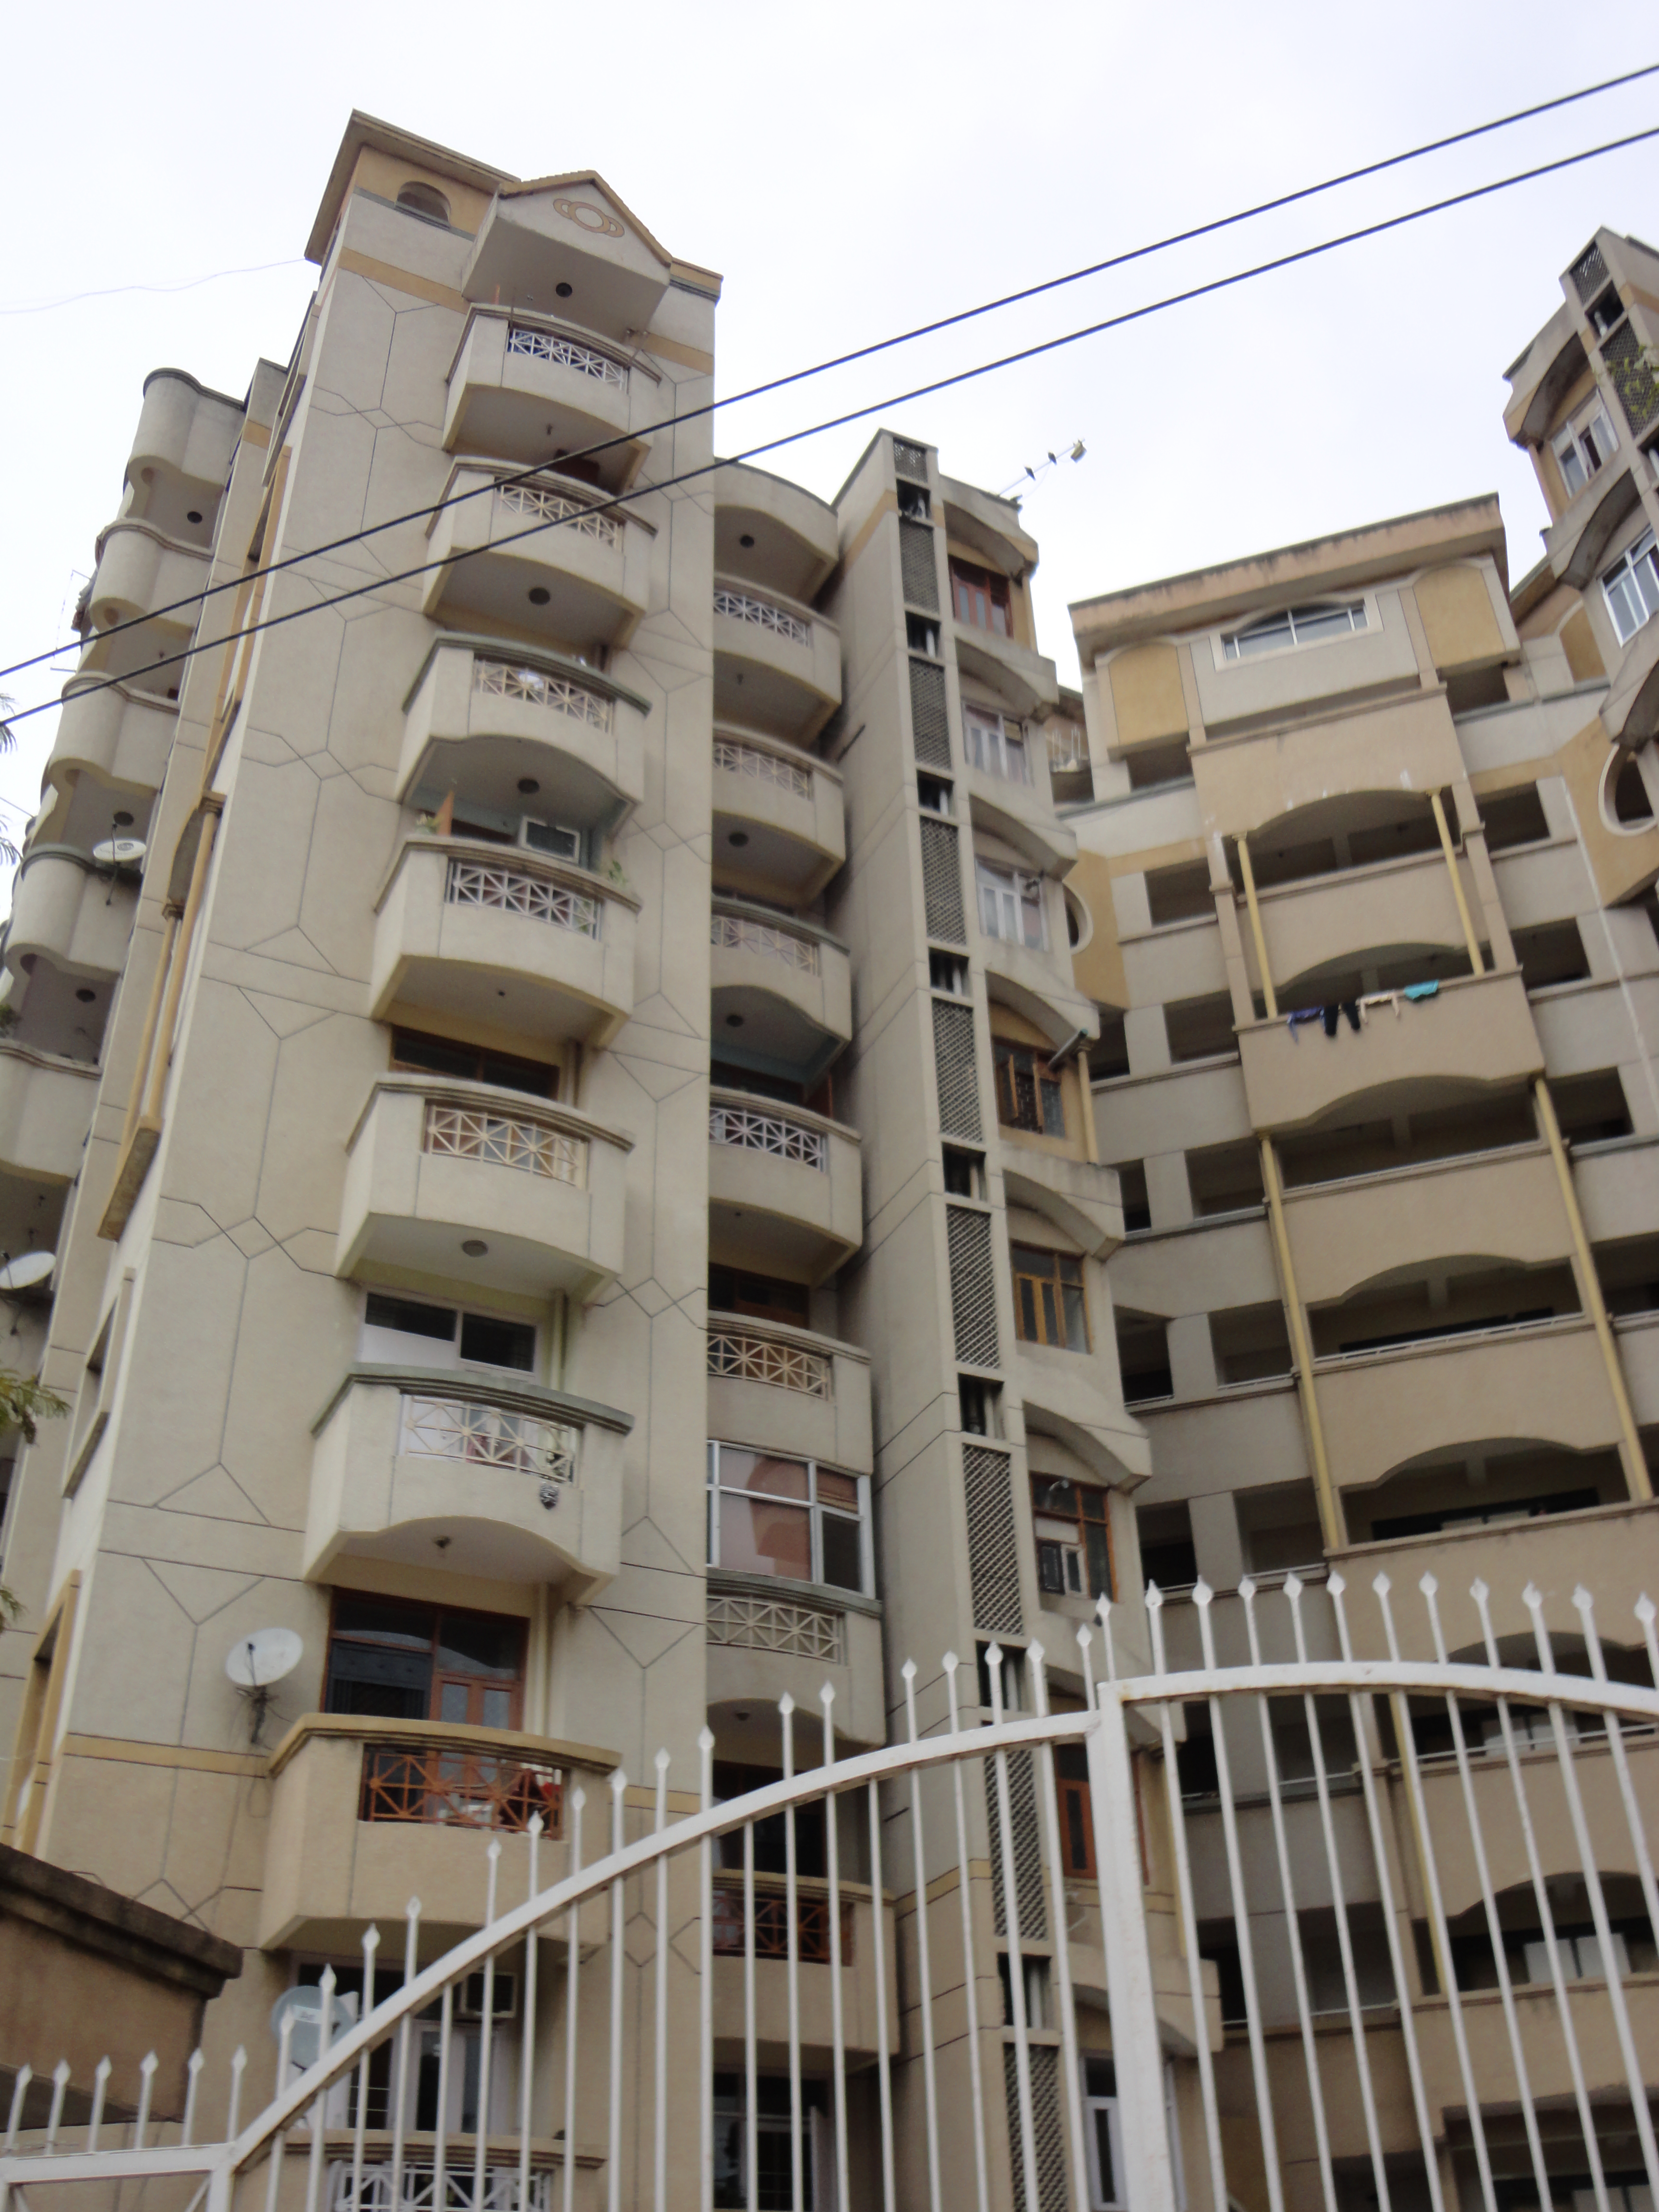 Aravali Hills Apartments CGHS Project Deails